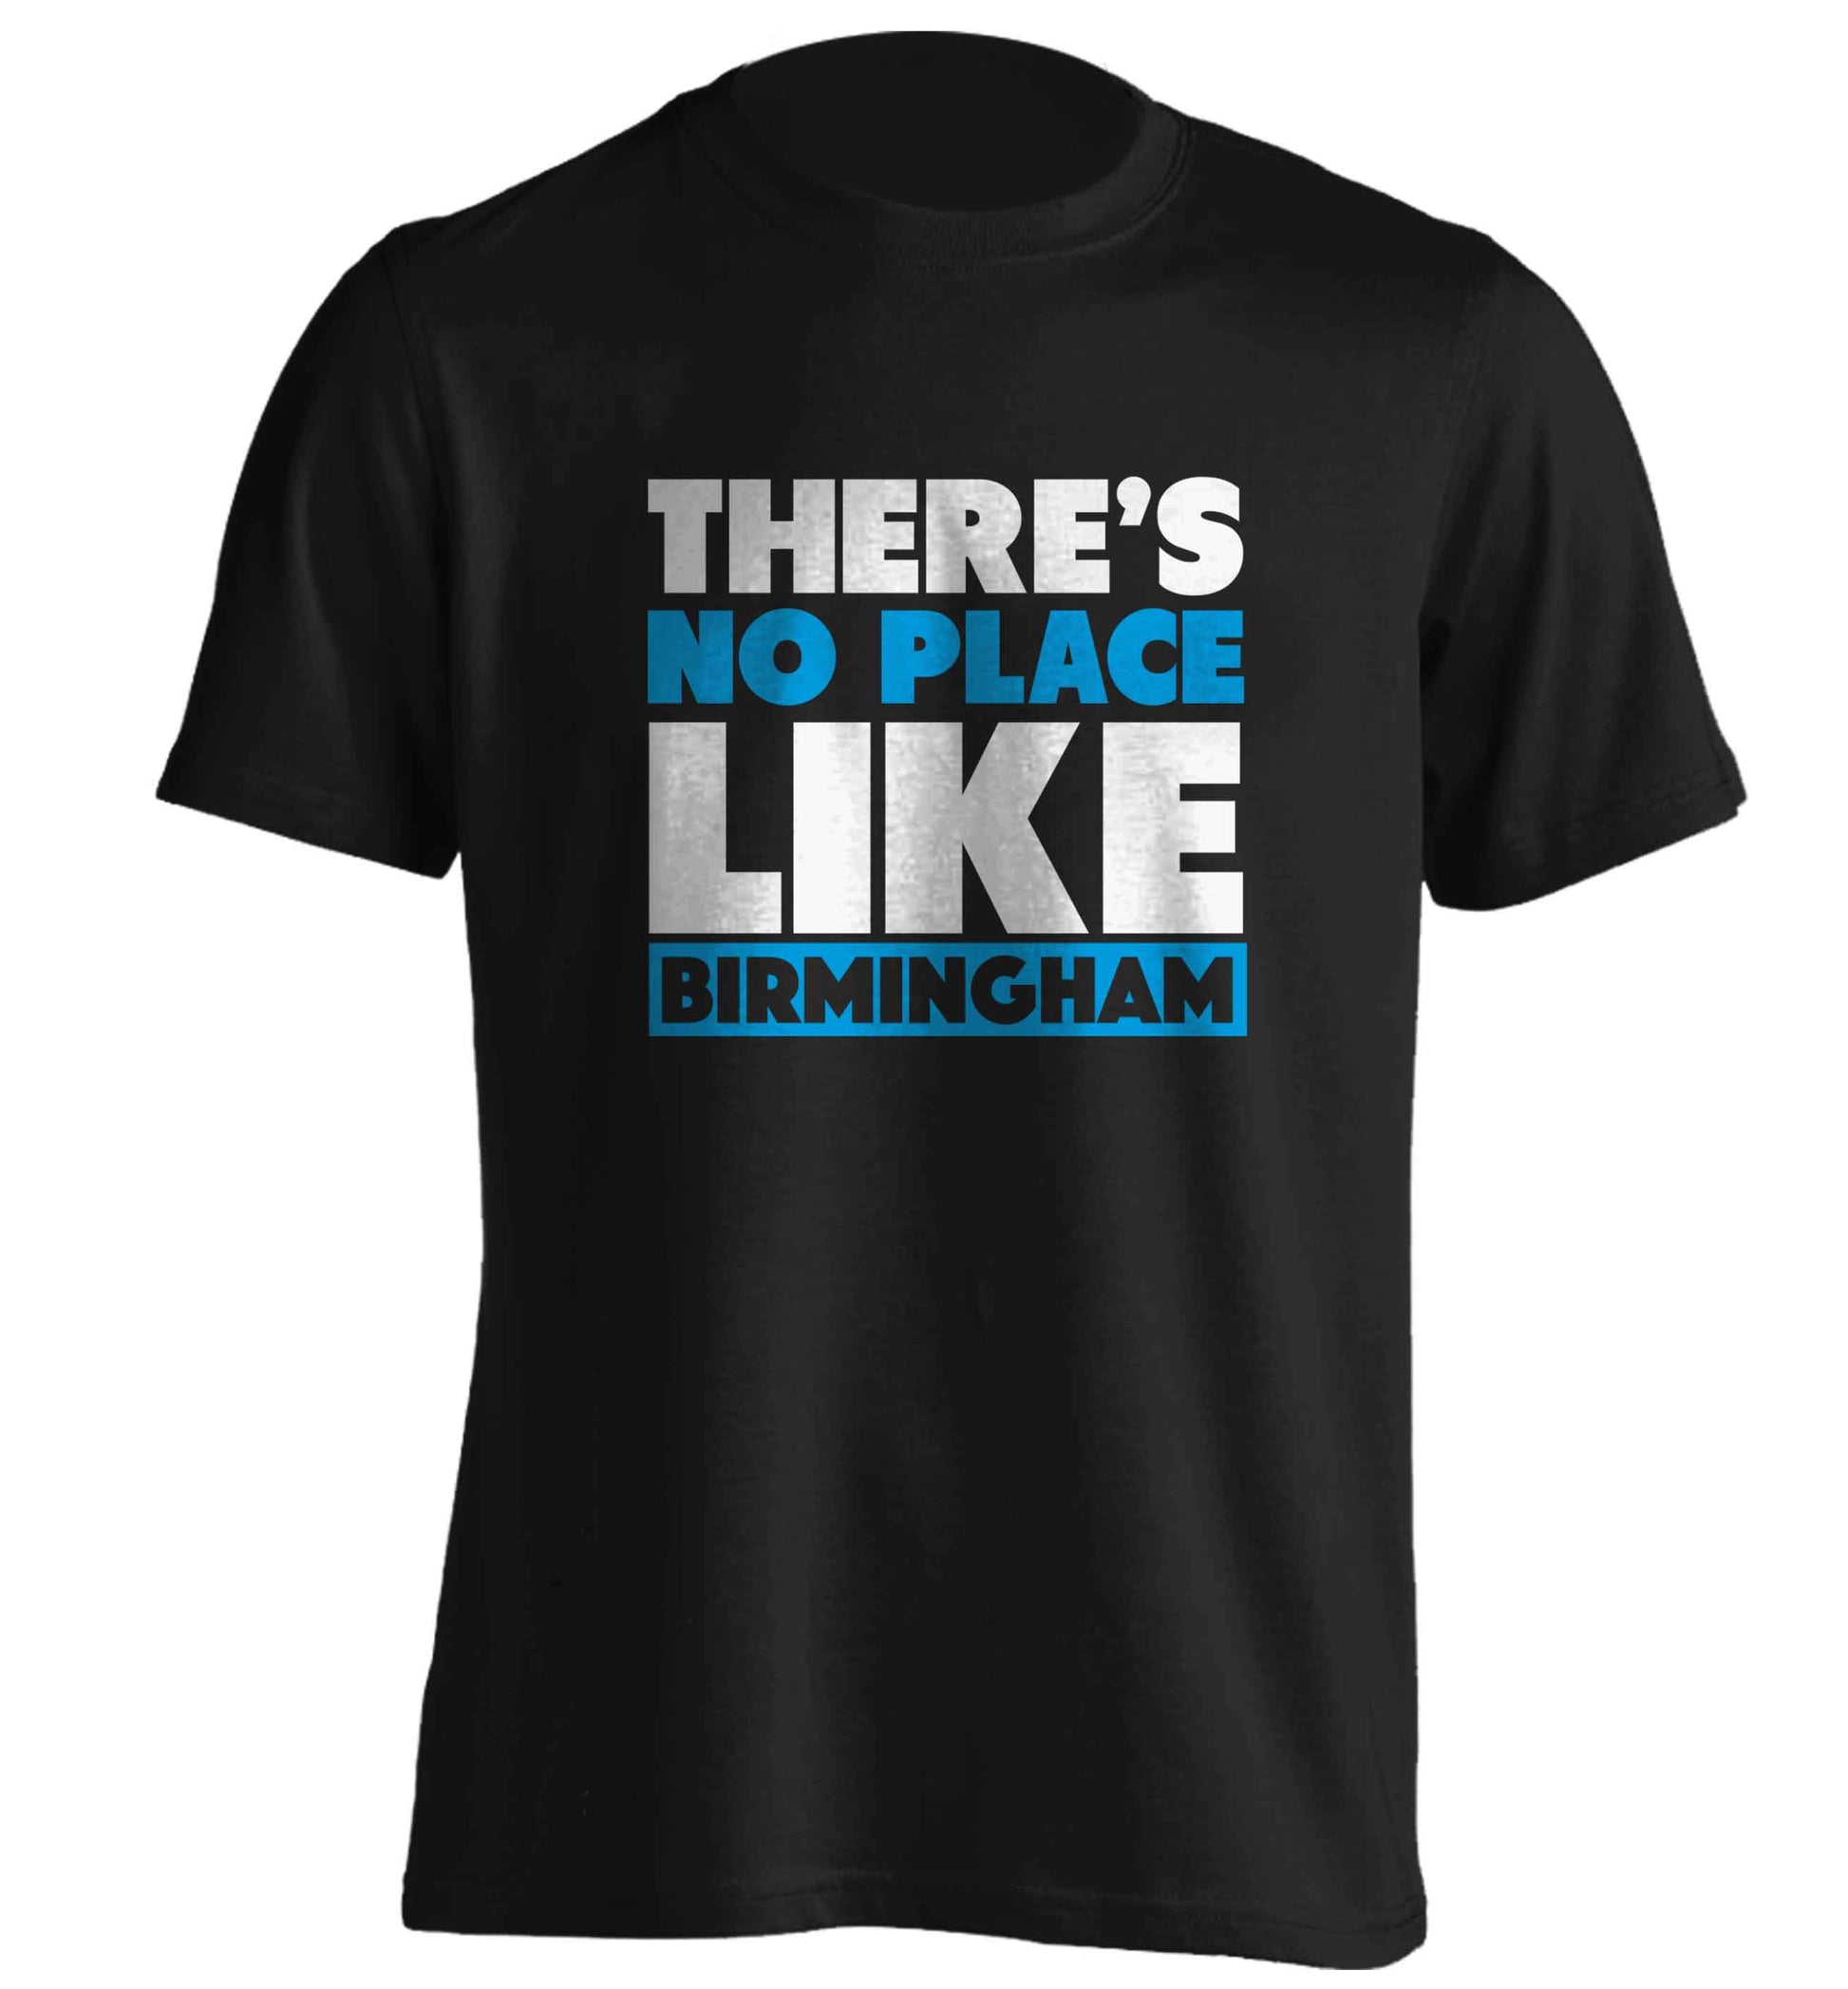 There's no place like Birmingham adults unisex black Tshirt 2XL